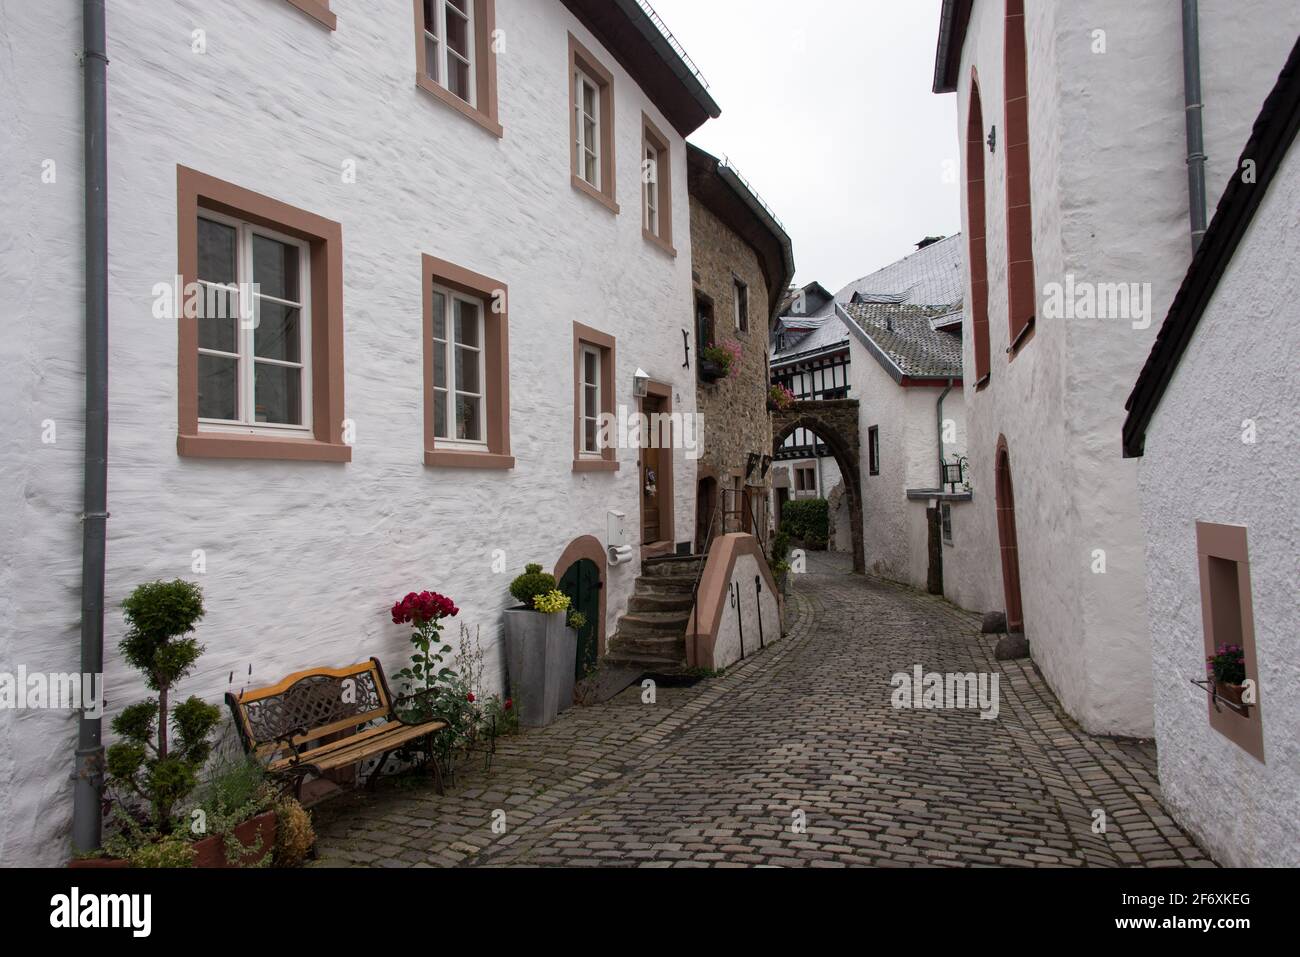 Eine schmale Straße im mittelalterlichen Städtchen Kronenburg in der Eifel - Una estrecha calle medieval en la ciudad de Kronenburg En la región de Eifel Foto de stock